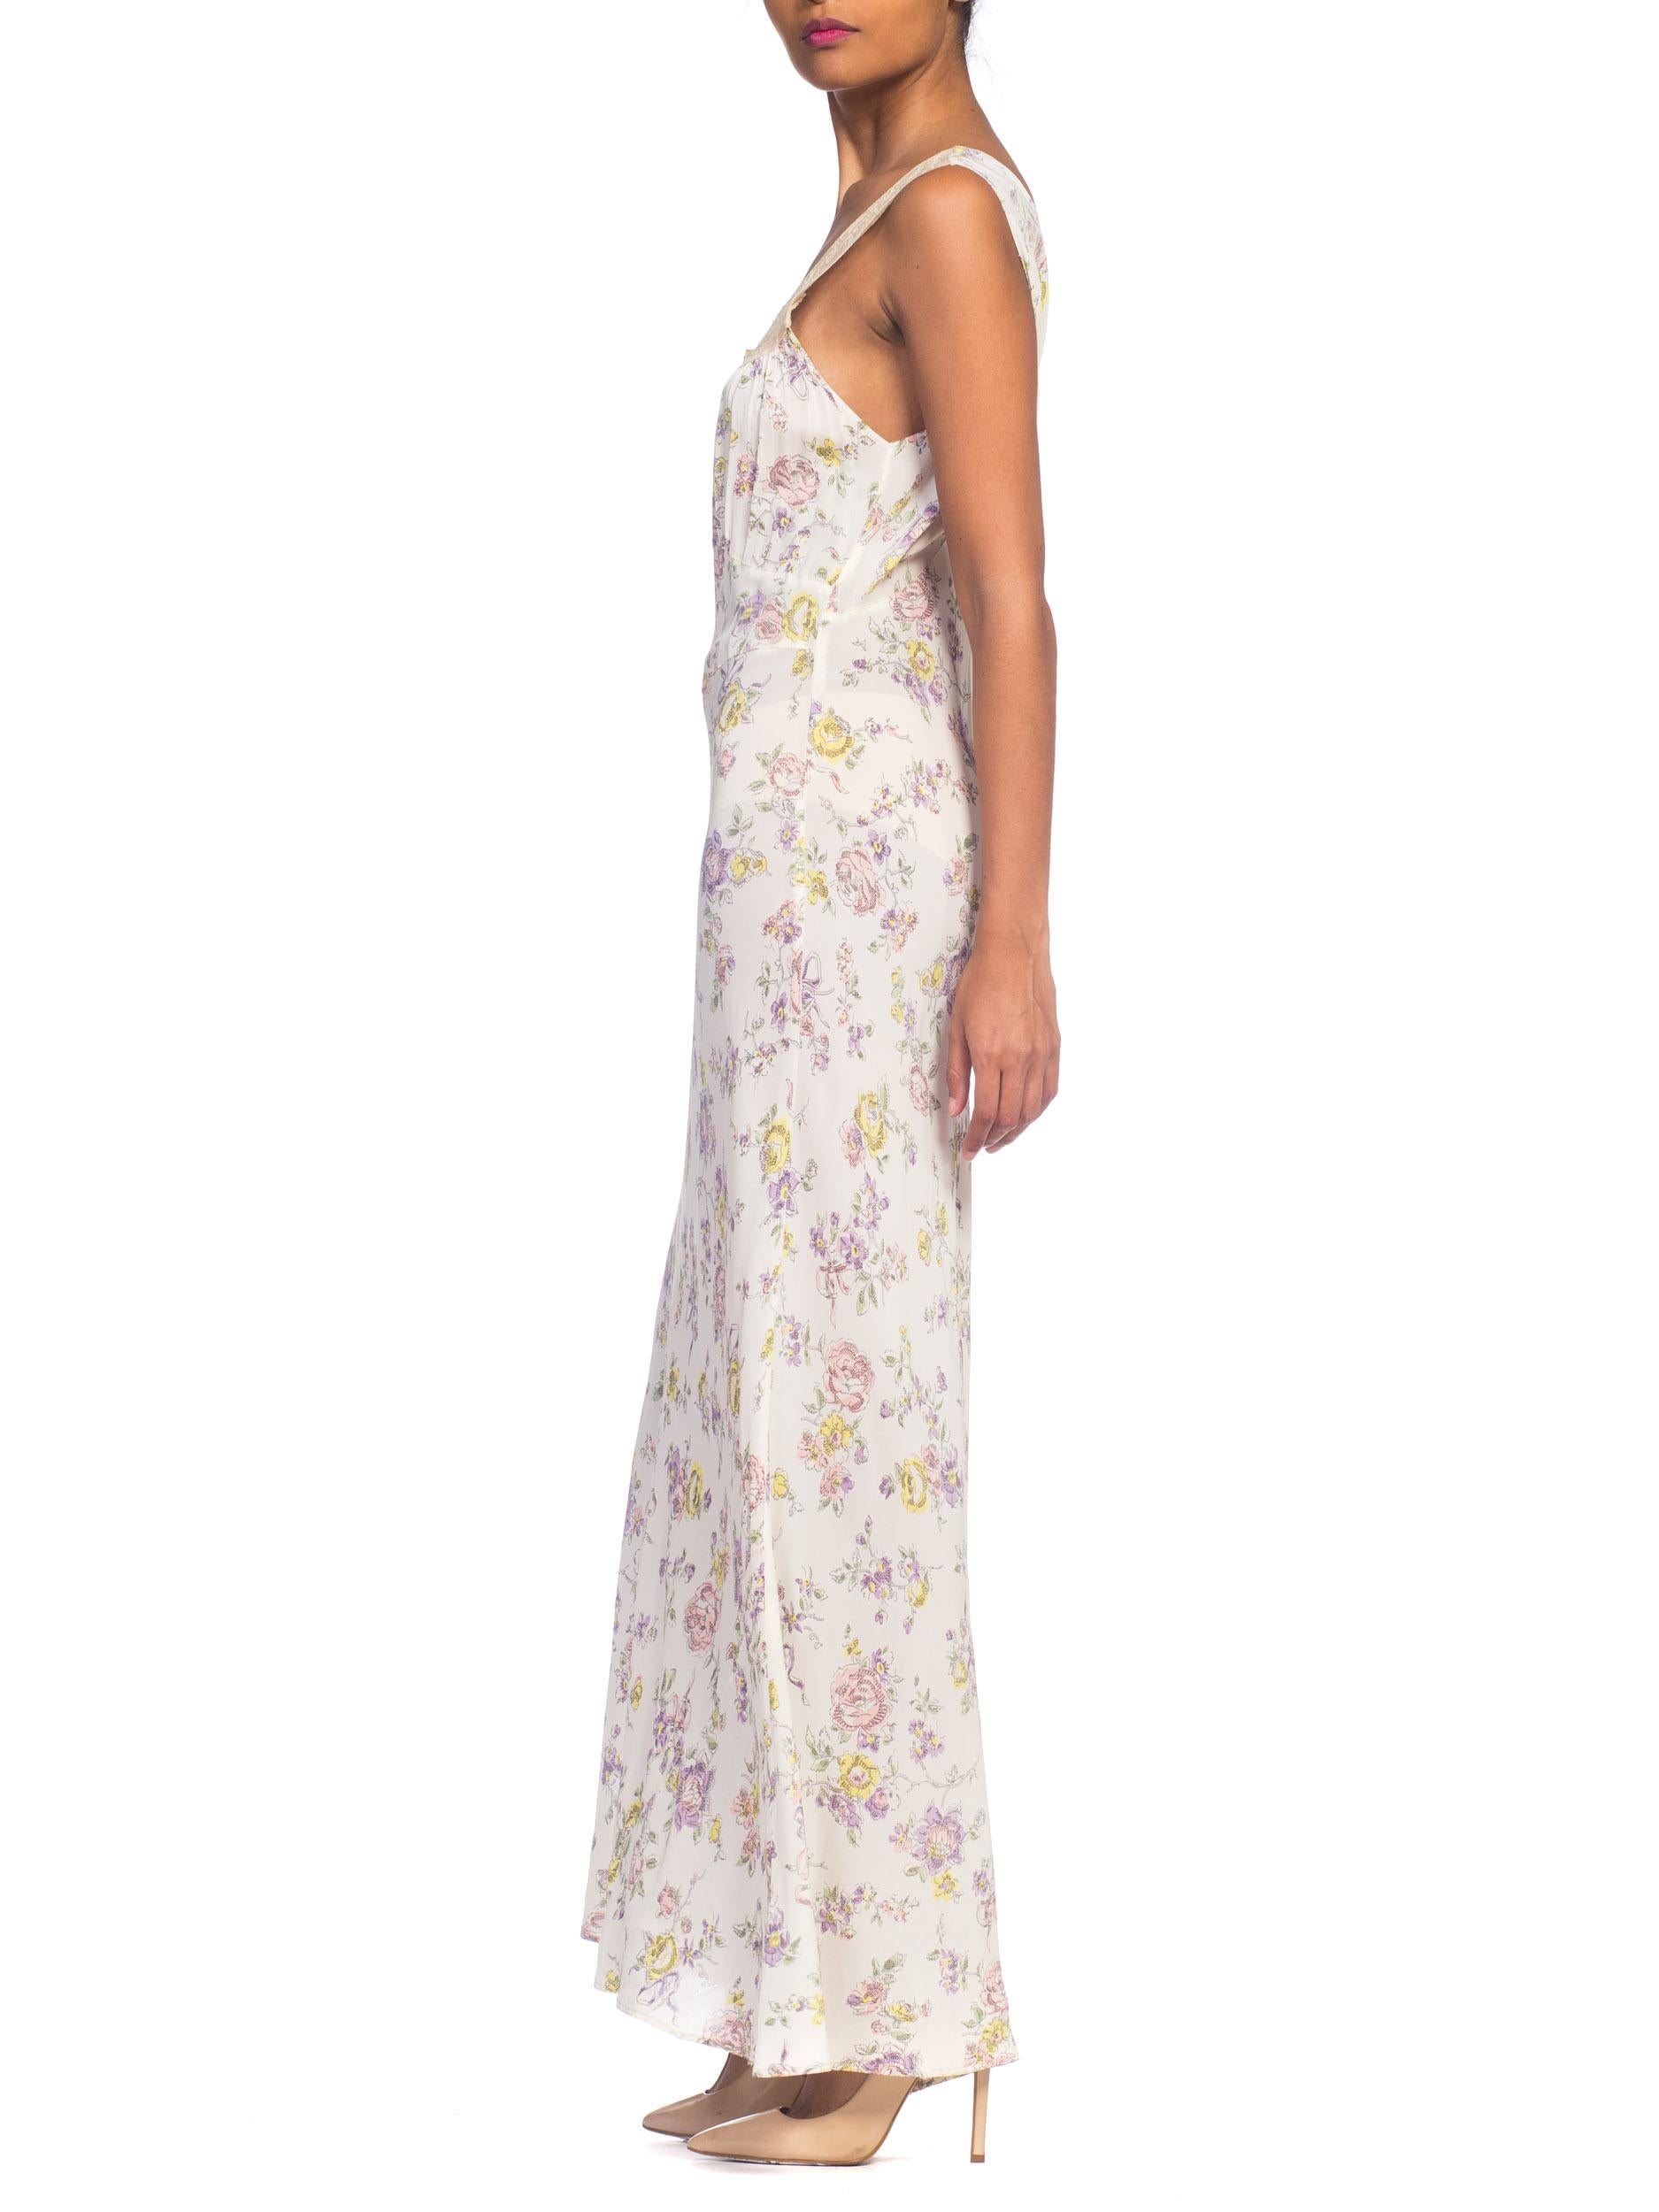 1930s Bias Cut Floral Rayon & Lace Negligee Slip Dress 2